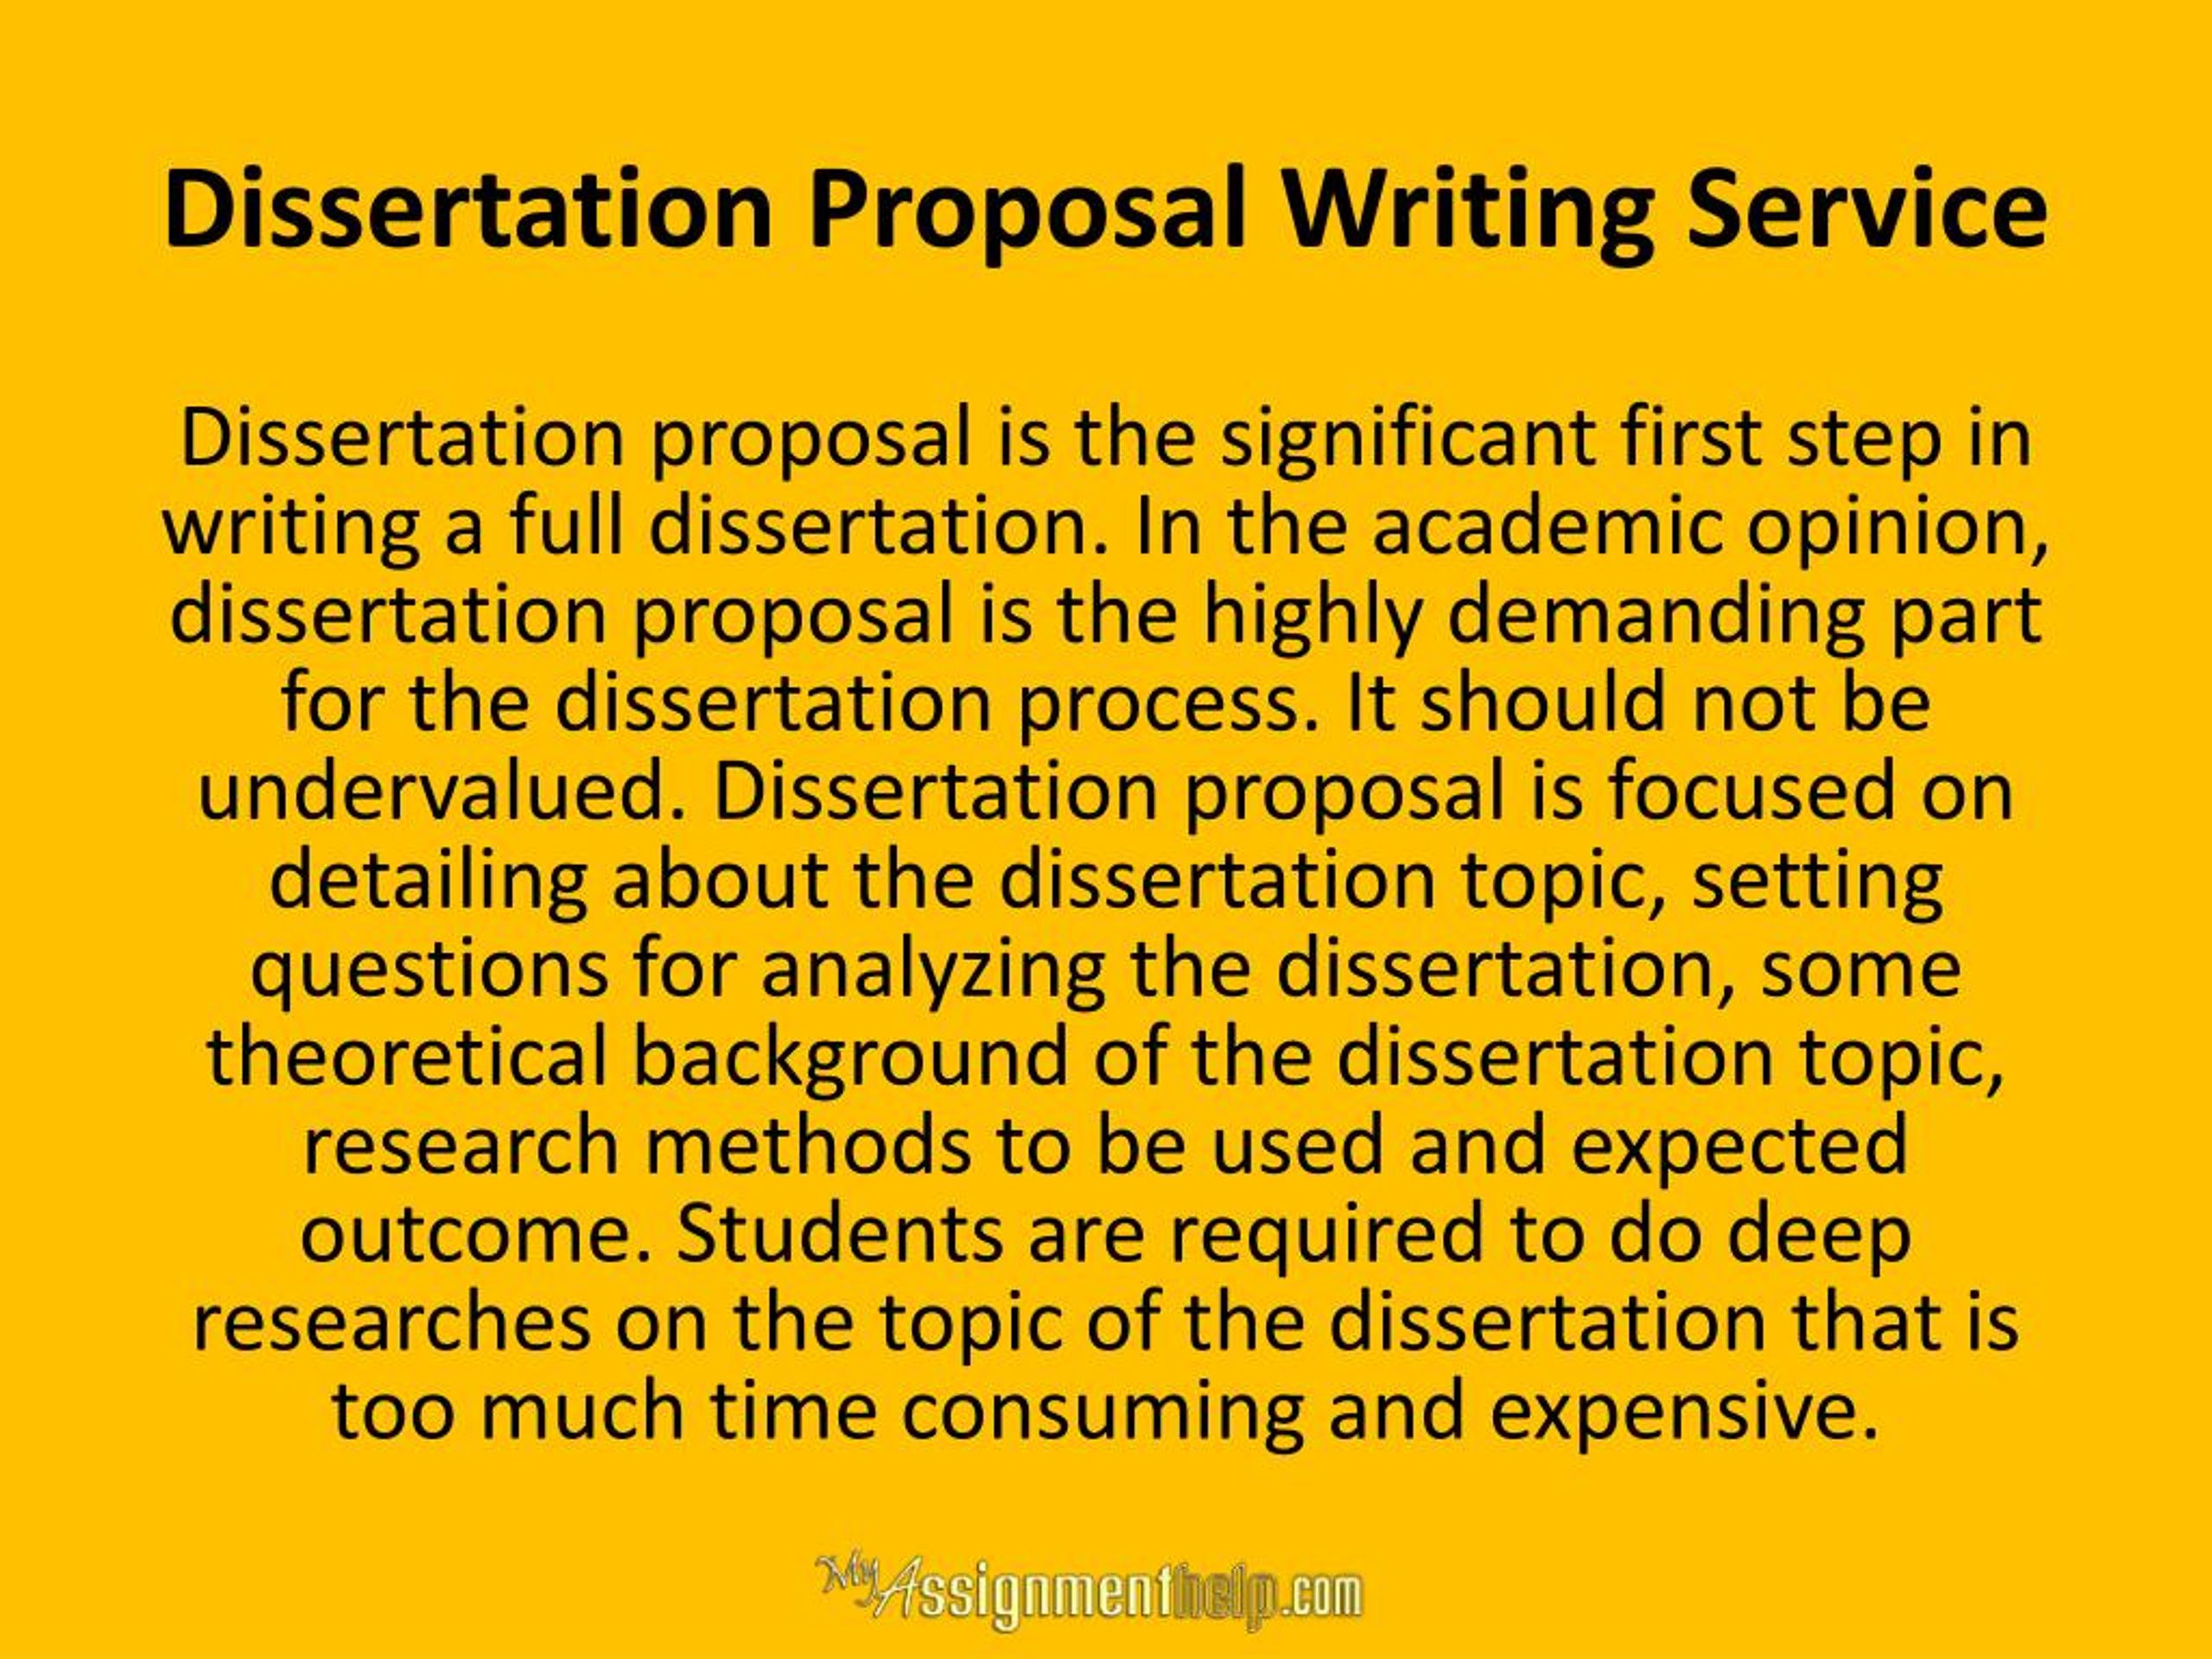 Dissertation proposal writing